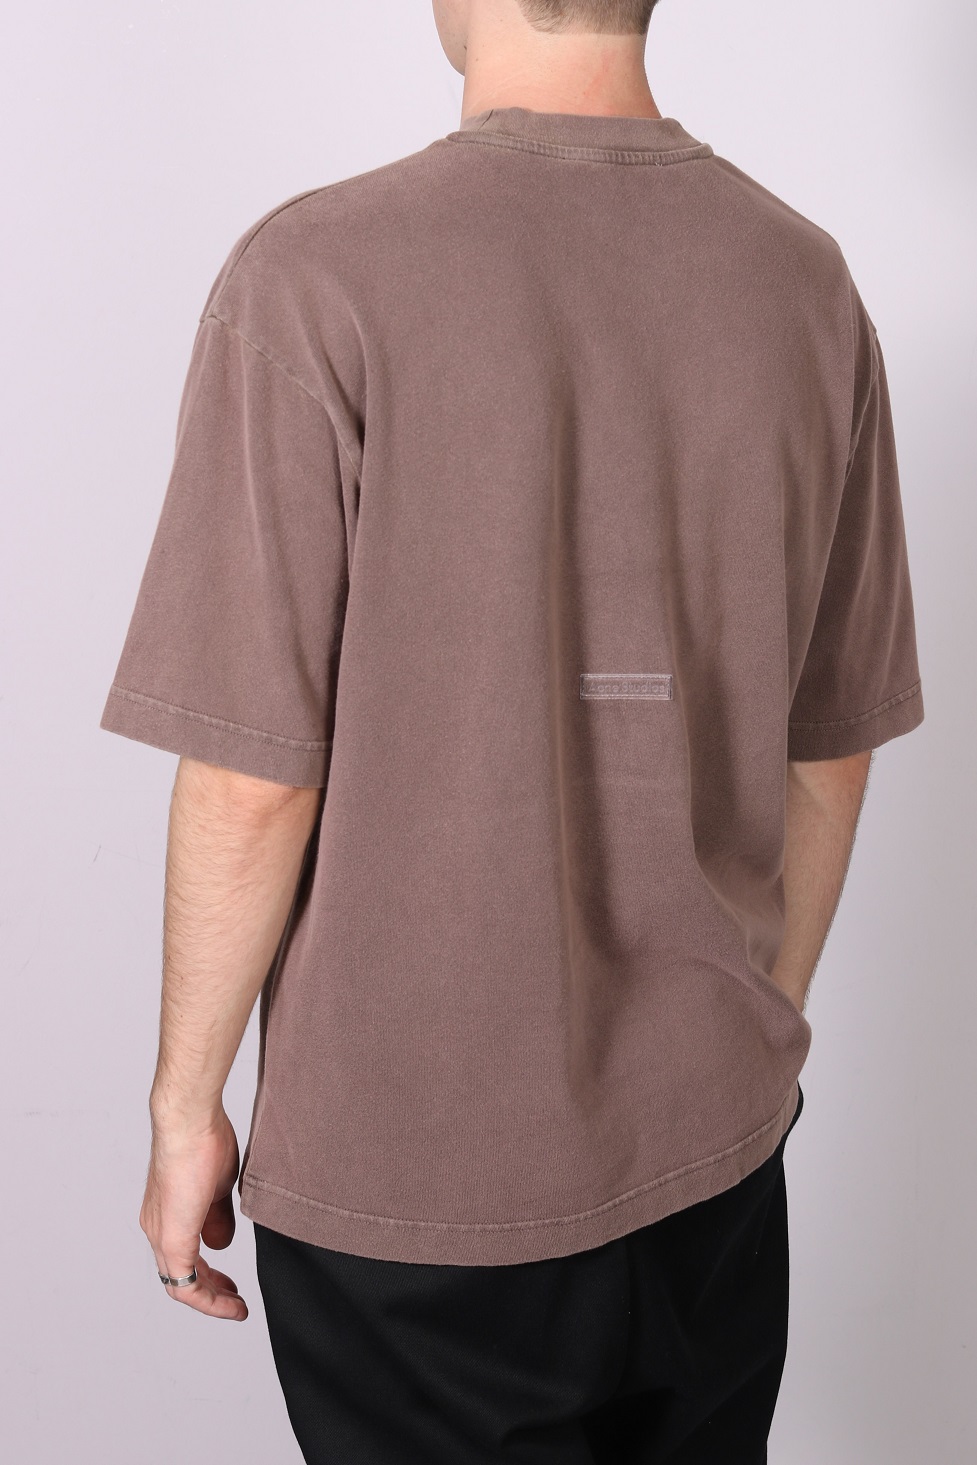 ACNE STUDIOS Vintage T-Shirt in Dark Brown XXS